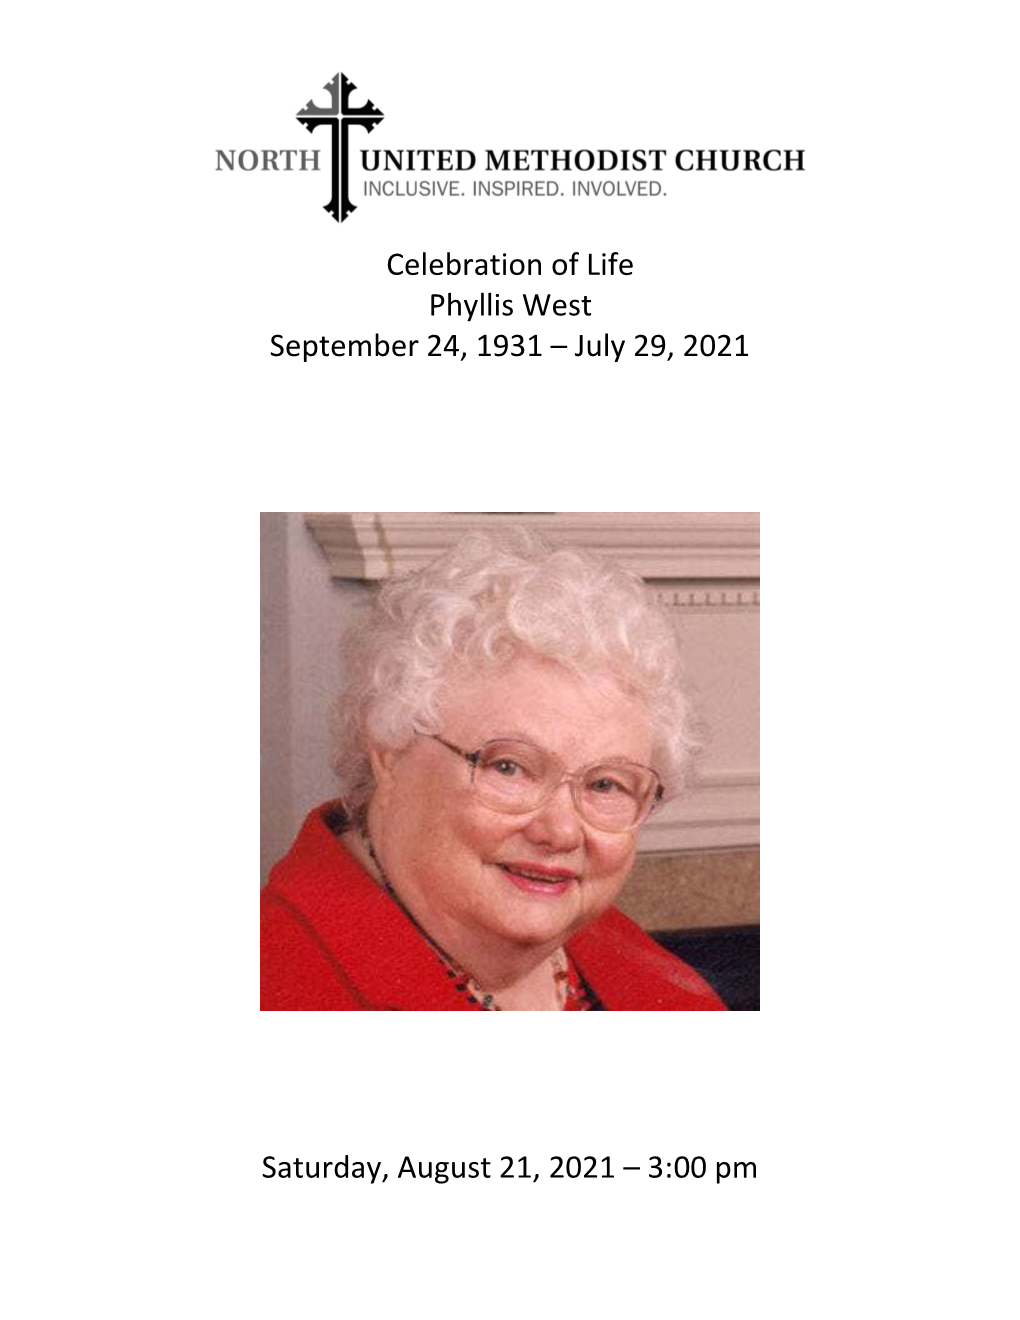 Phyllis West's Memorial Service